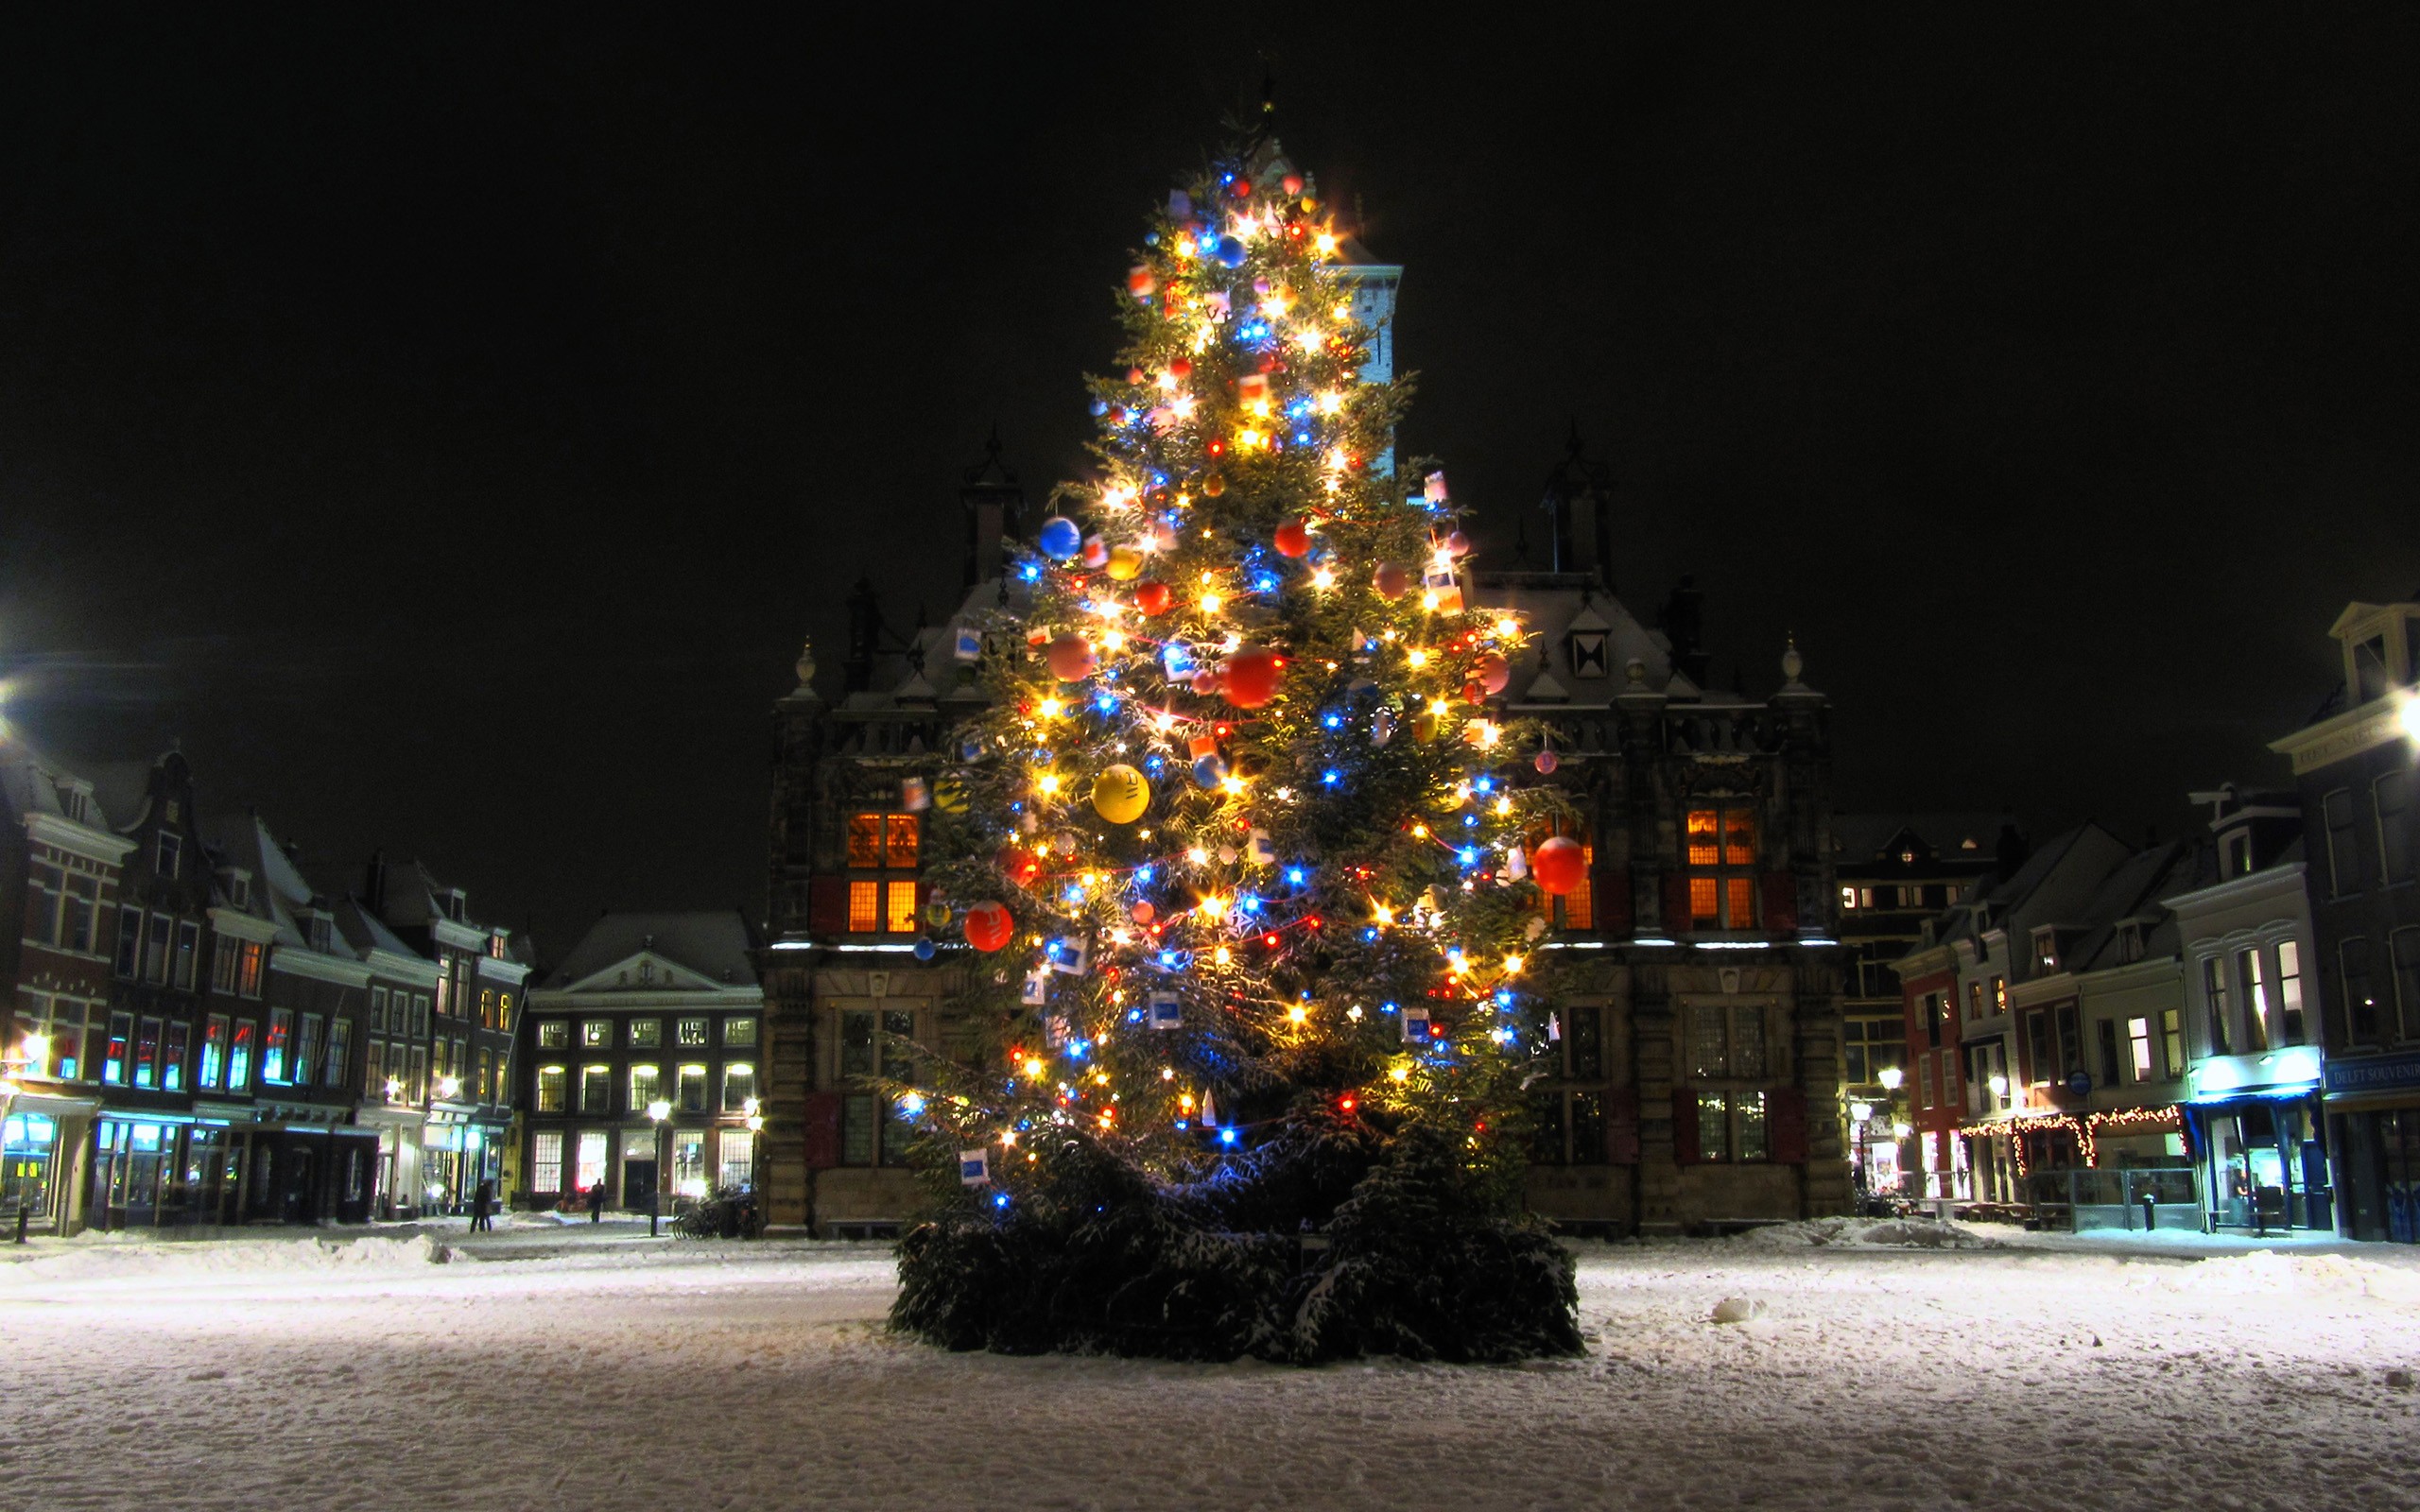 General 2560x1600 Christmas snow fir-tree Christmas ornaments  holiday urban lights winter outdoors Christmas tree